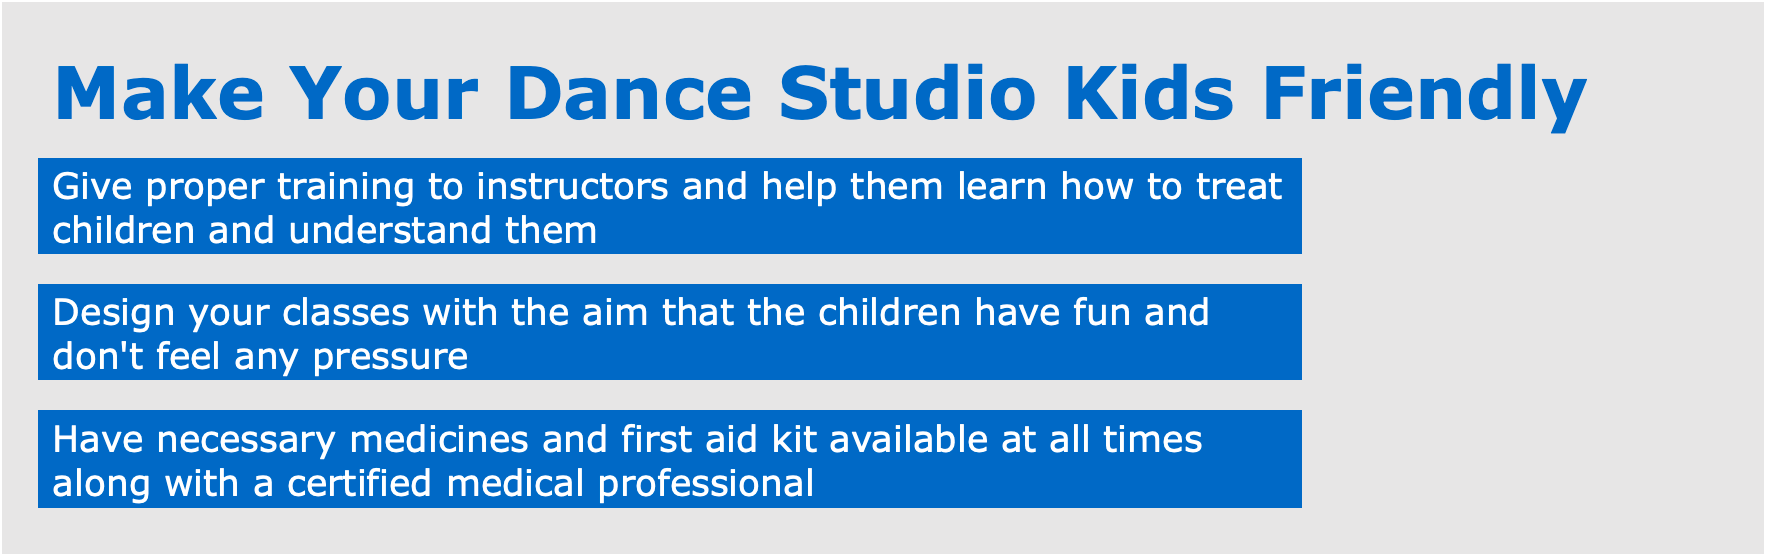 Make your dance studio kids friendly